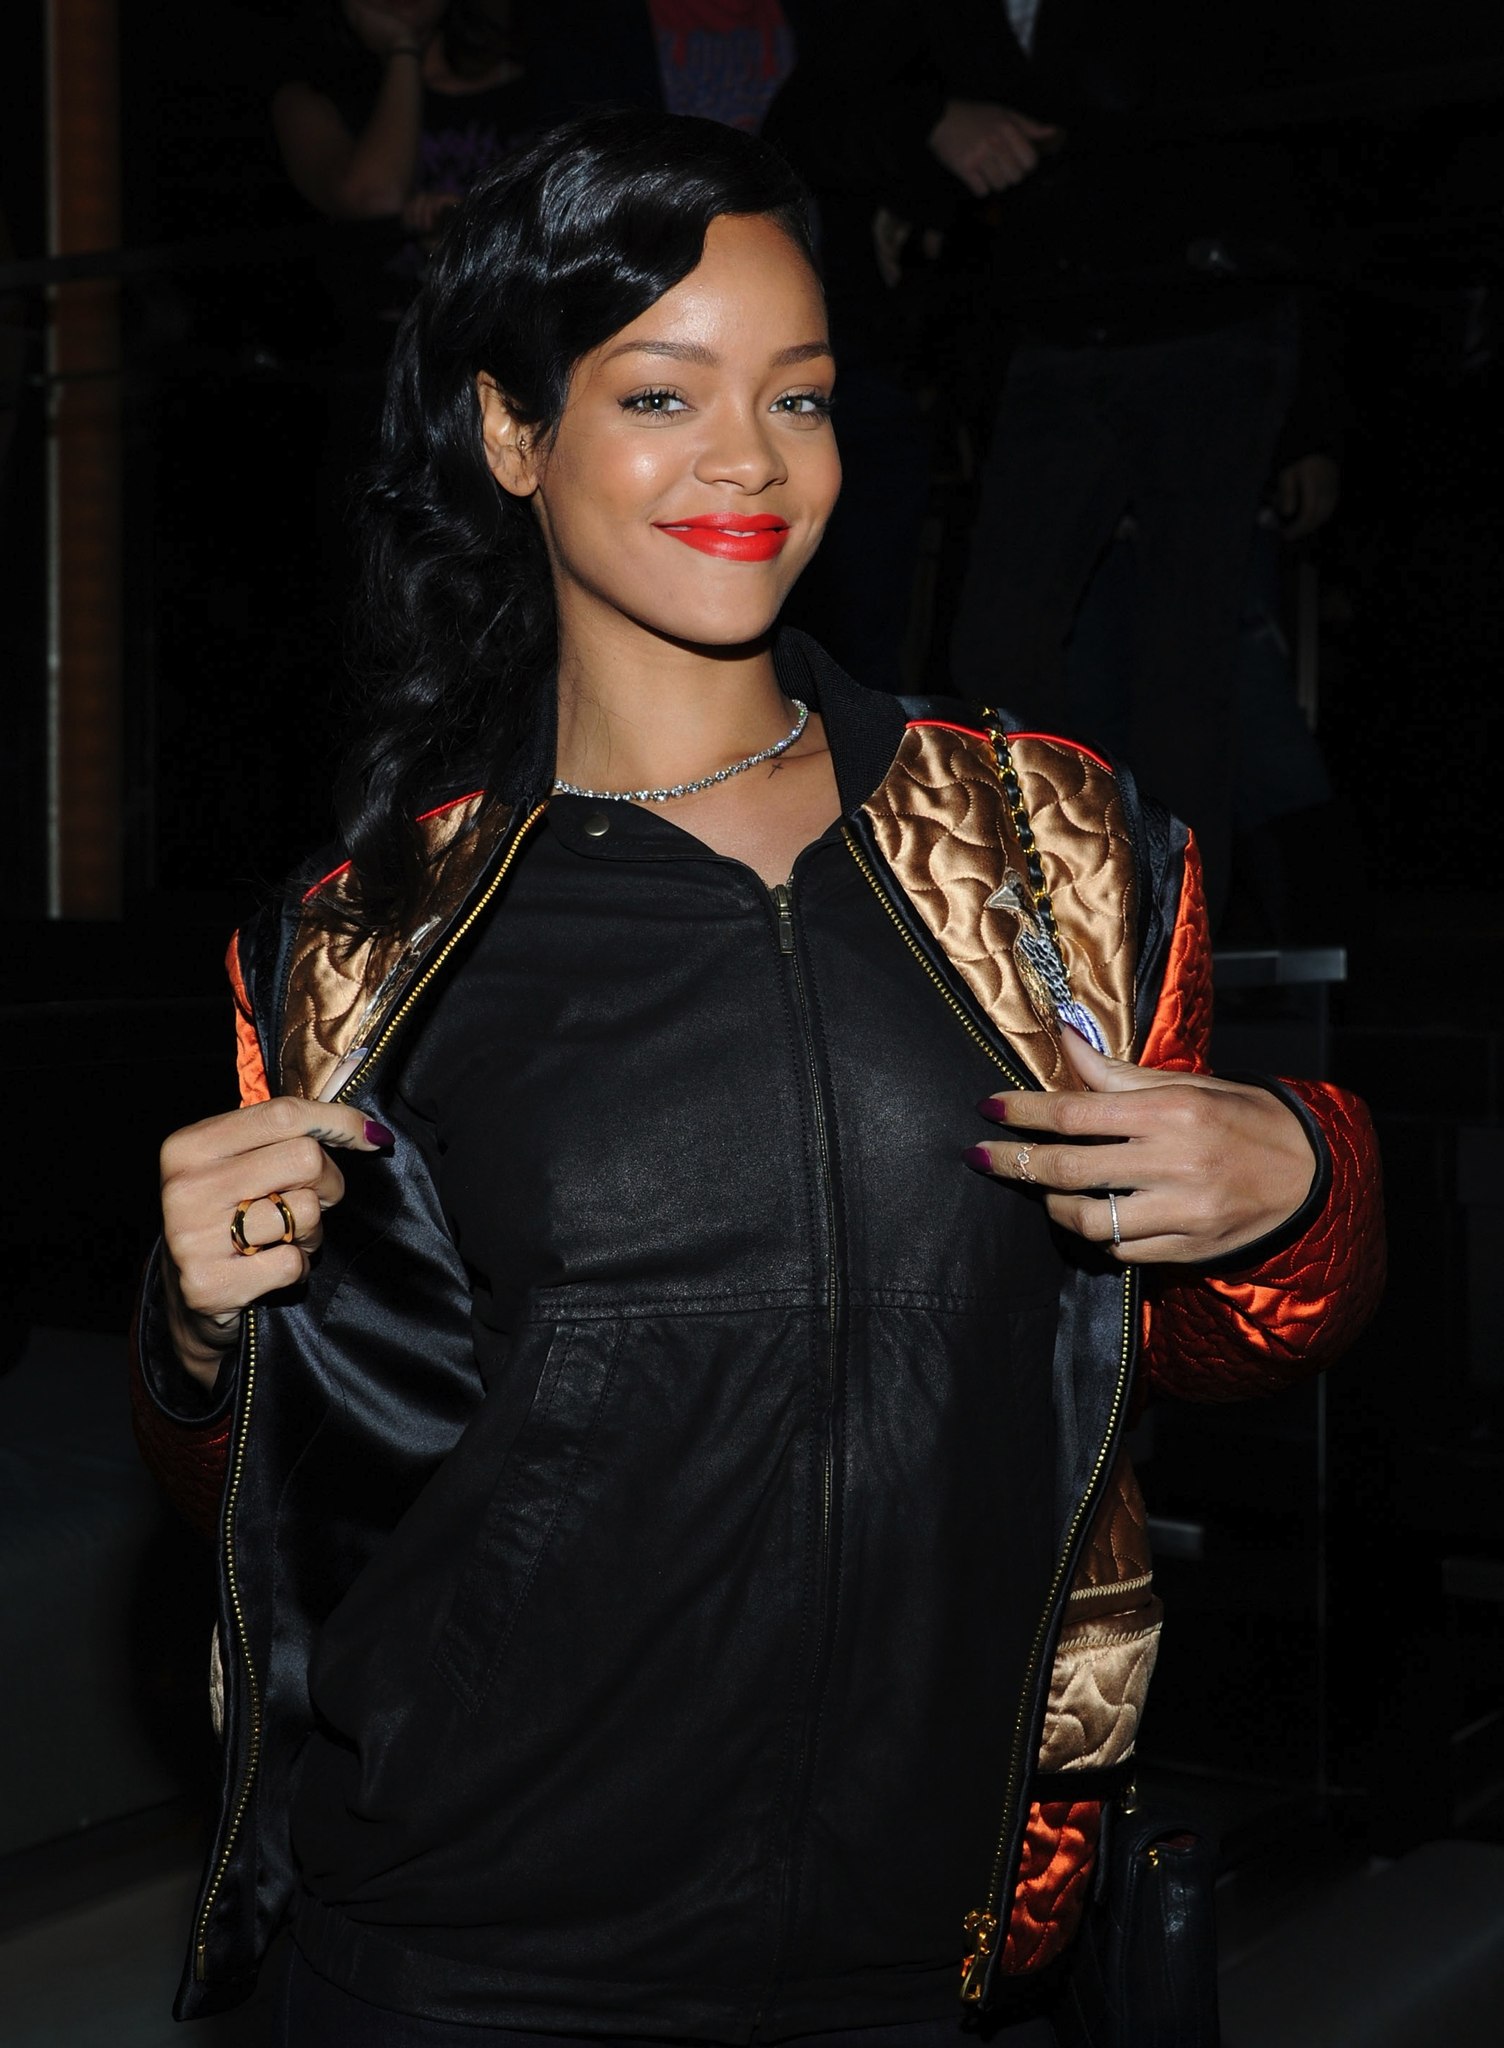 Rihanna photo 3641 of 9313 pics, wallpaper - photo #552455 - ThePlace2